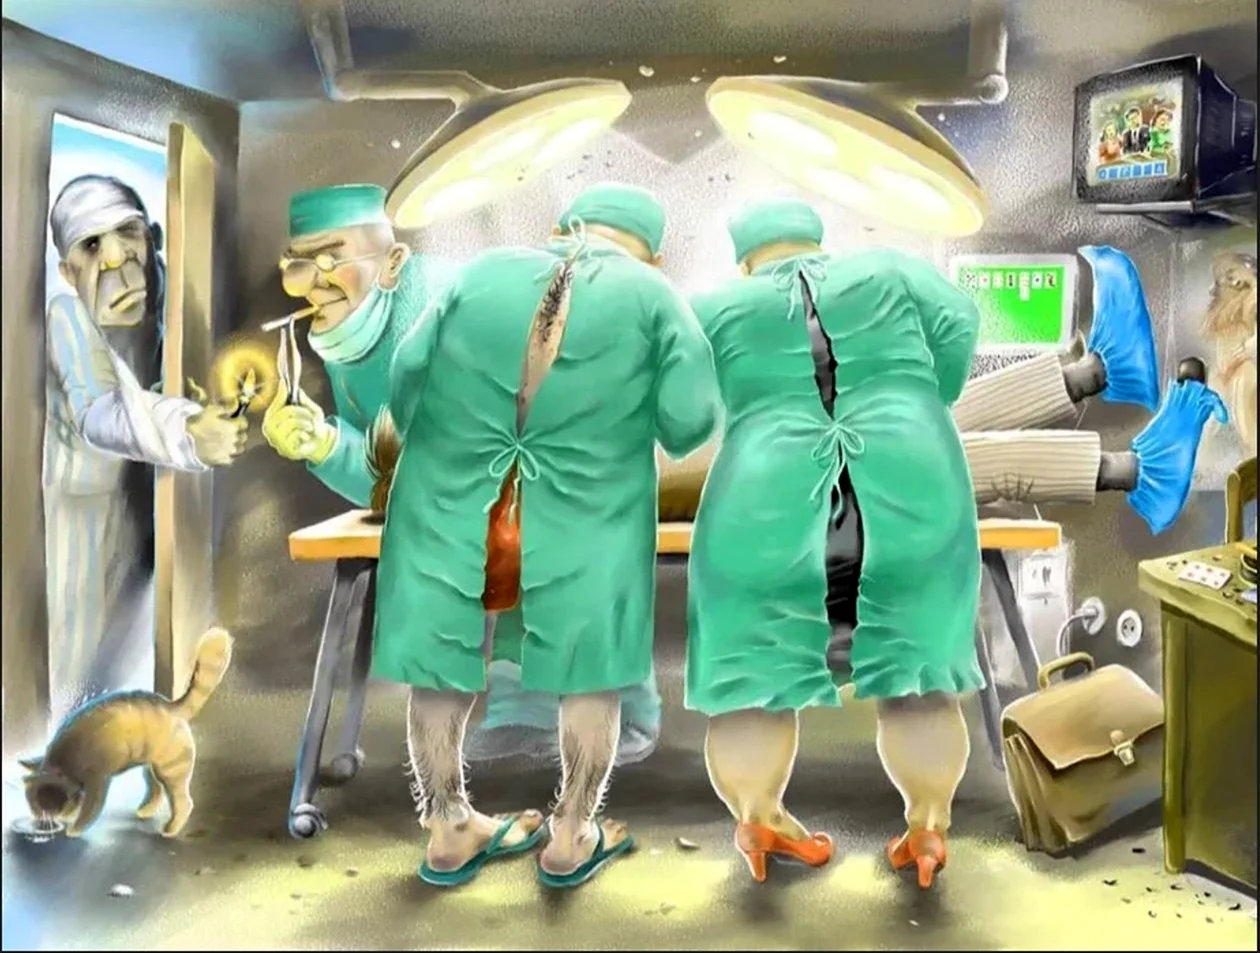 Хирурги в операционной карикатура. Картинка